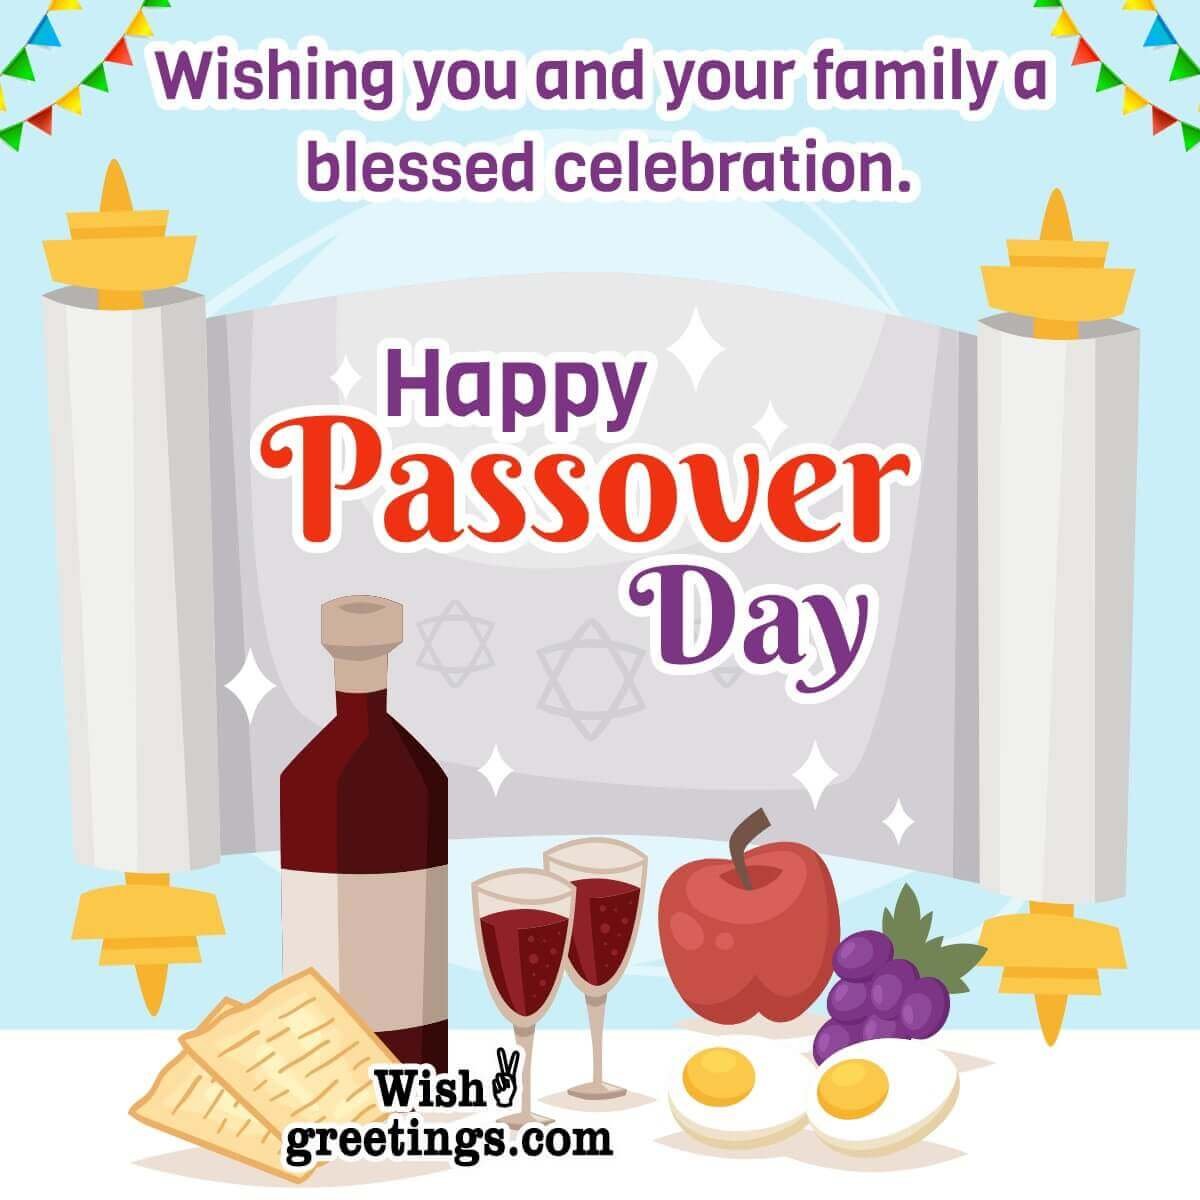 Happy Passover Day Wish Image